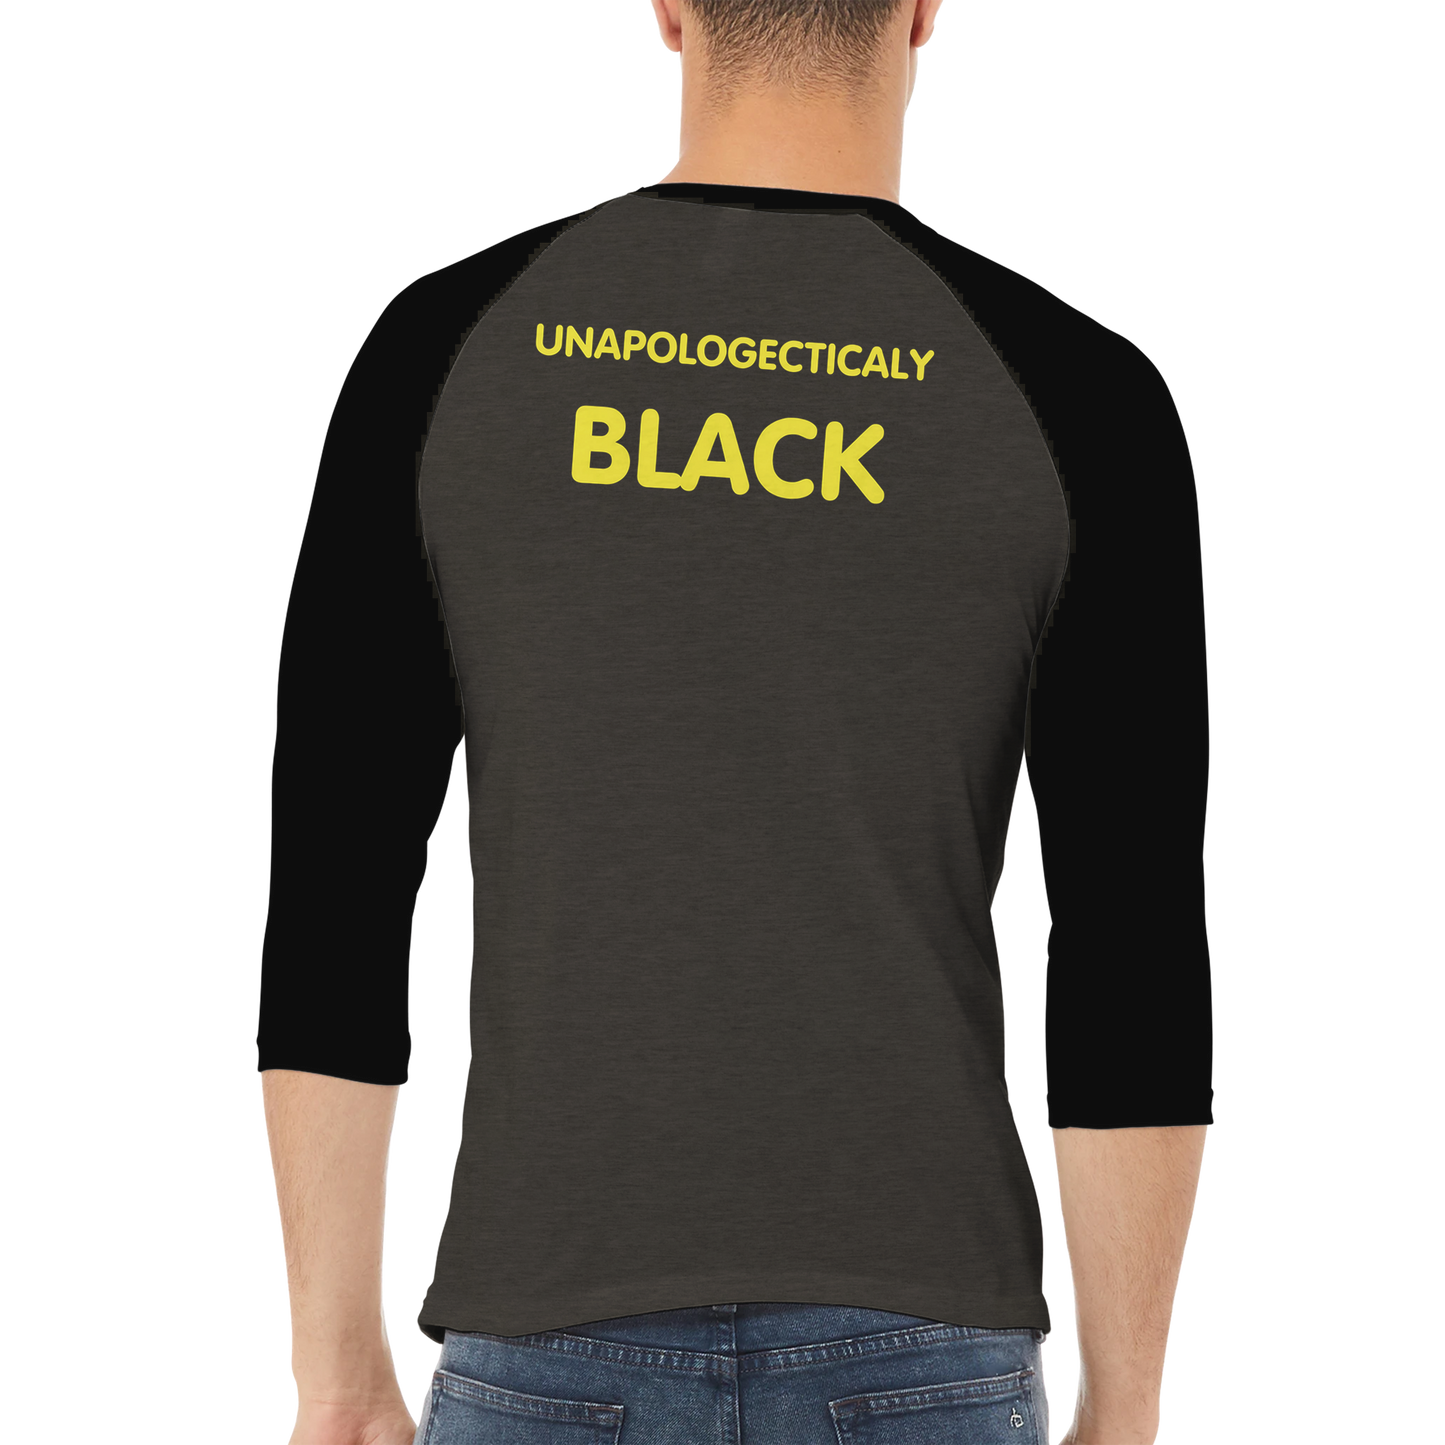 Unapologetically BLACK - Unisex 3/4 sleeve Raglan T-shirt